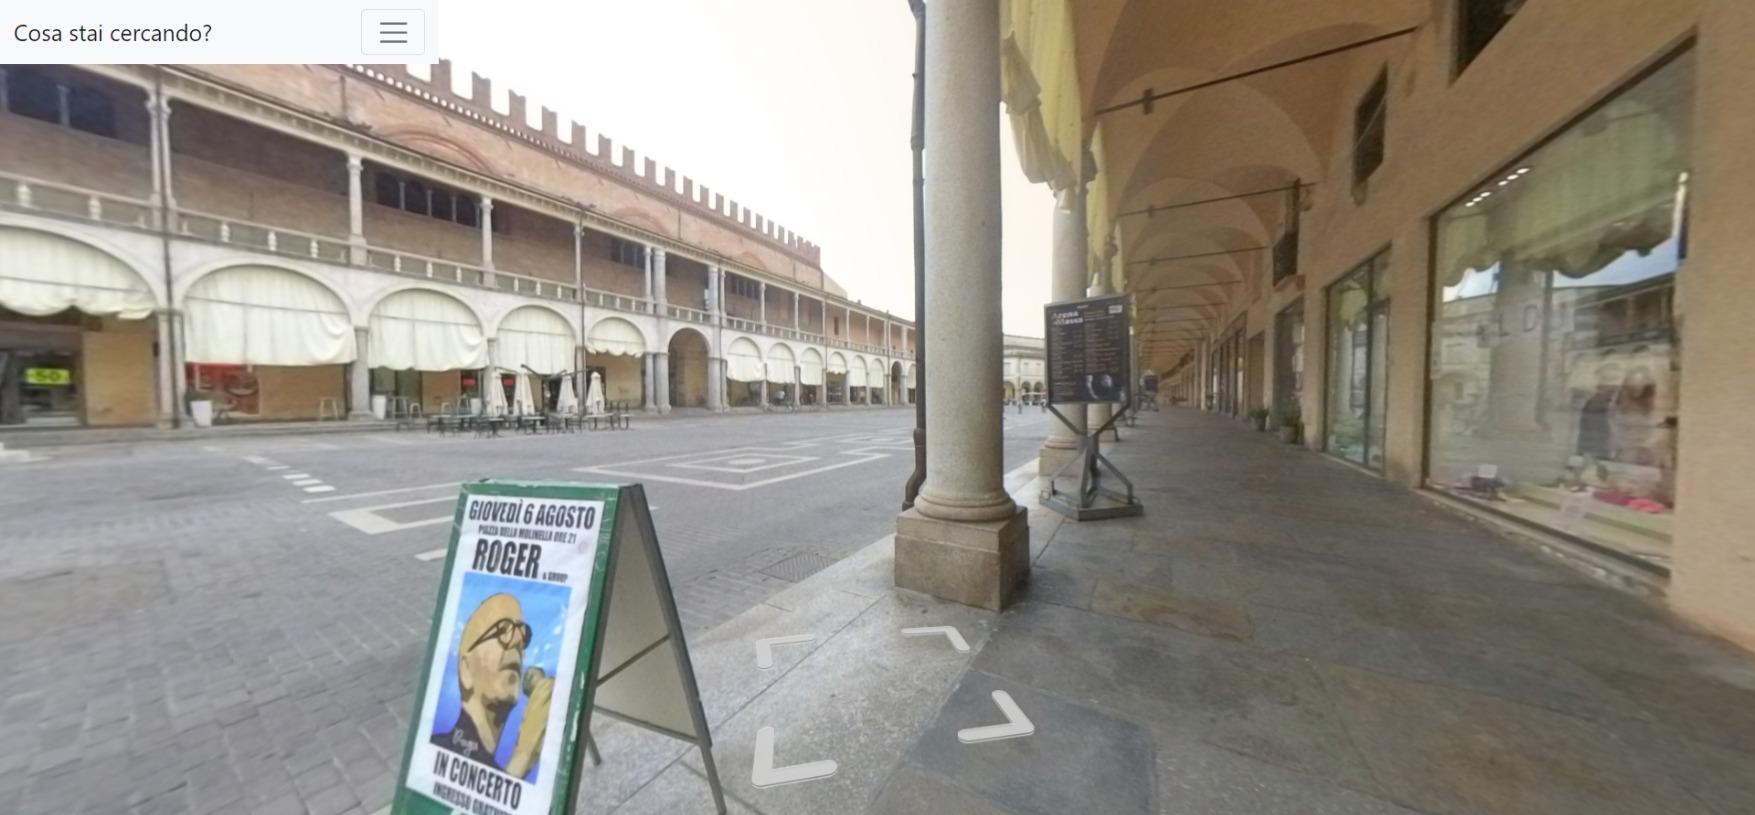 Centro storico Faenza